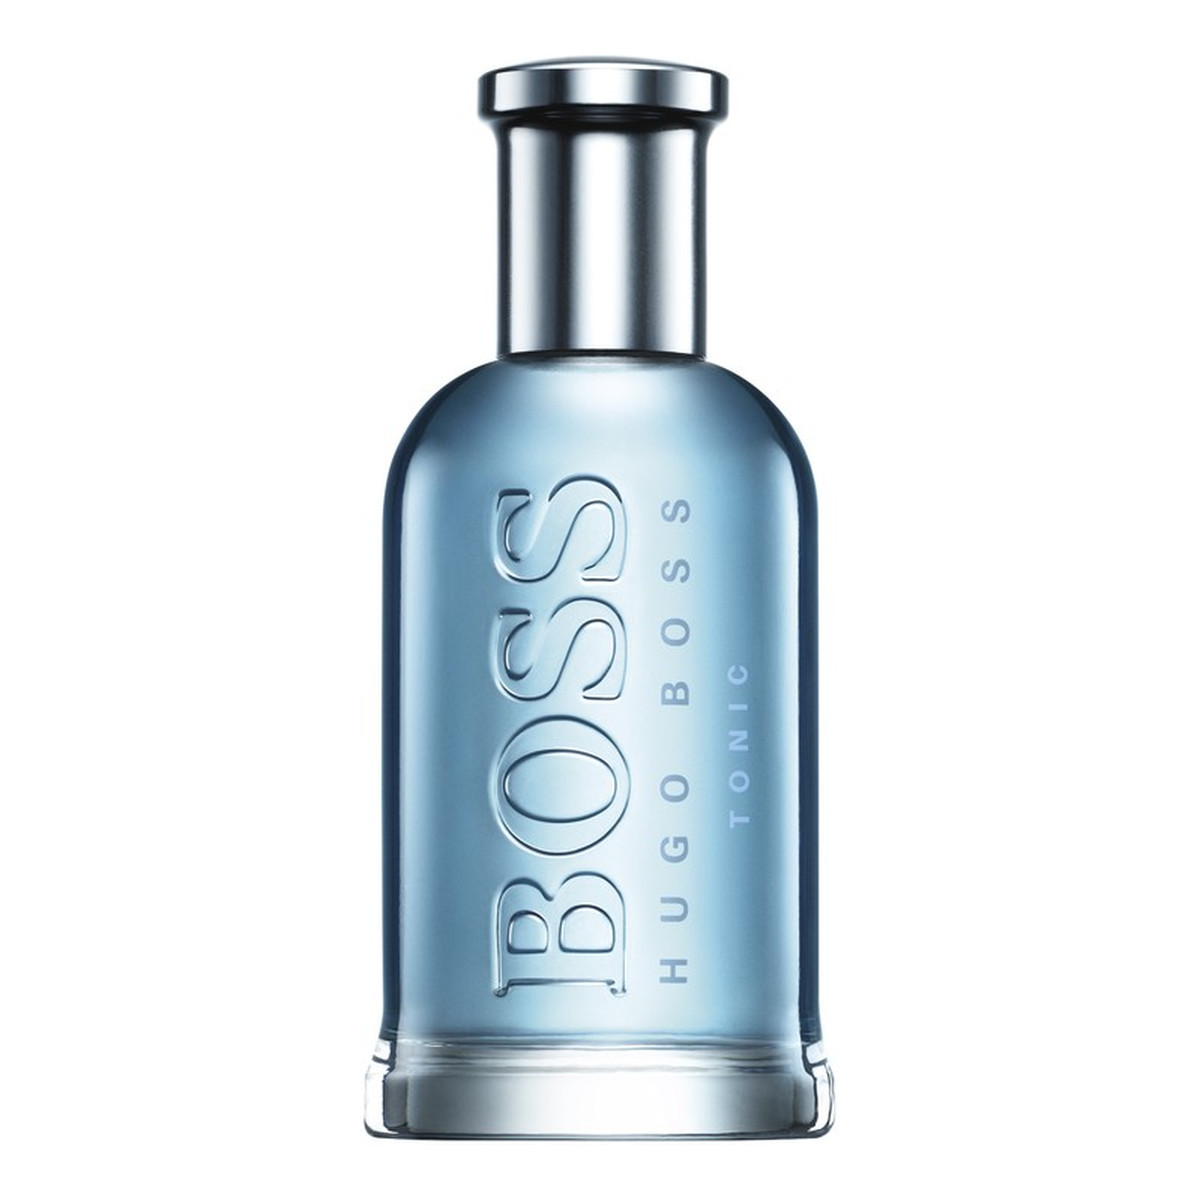 Hugo Boss Bottled Tonic woda toaletowa 50ml